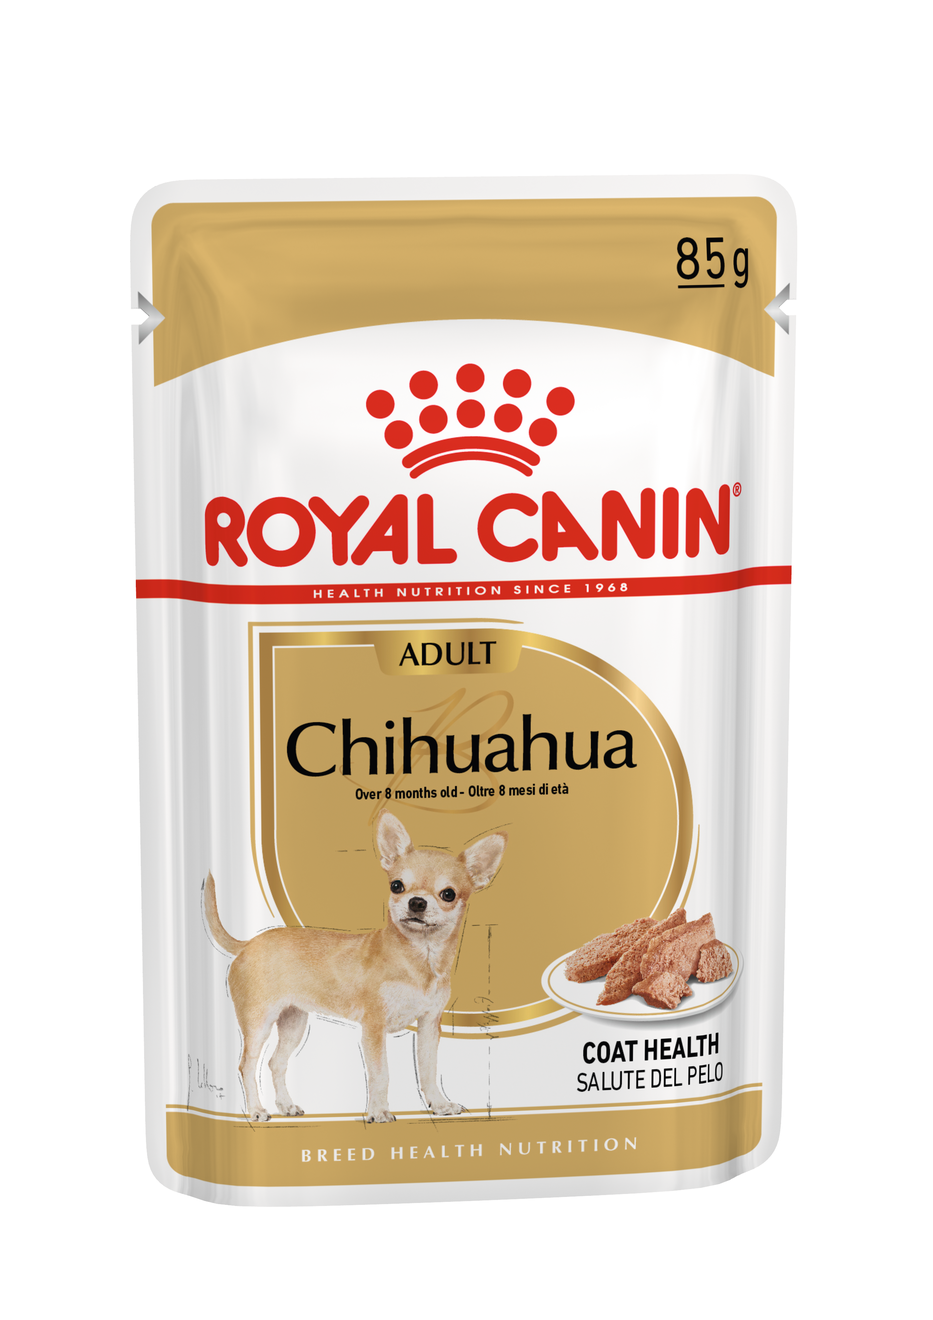 ROYAL CANIN® Chihuahua Adult voor volwassen en oudere honden van het ras Chihuahuavanaf 8 maanden (paté) 1,02kg